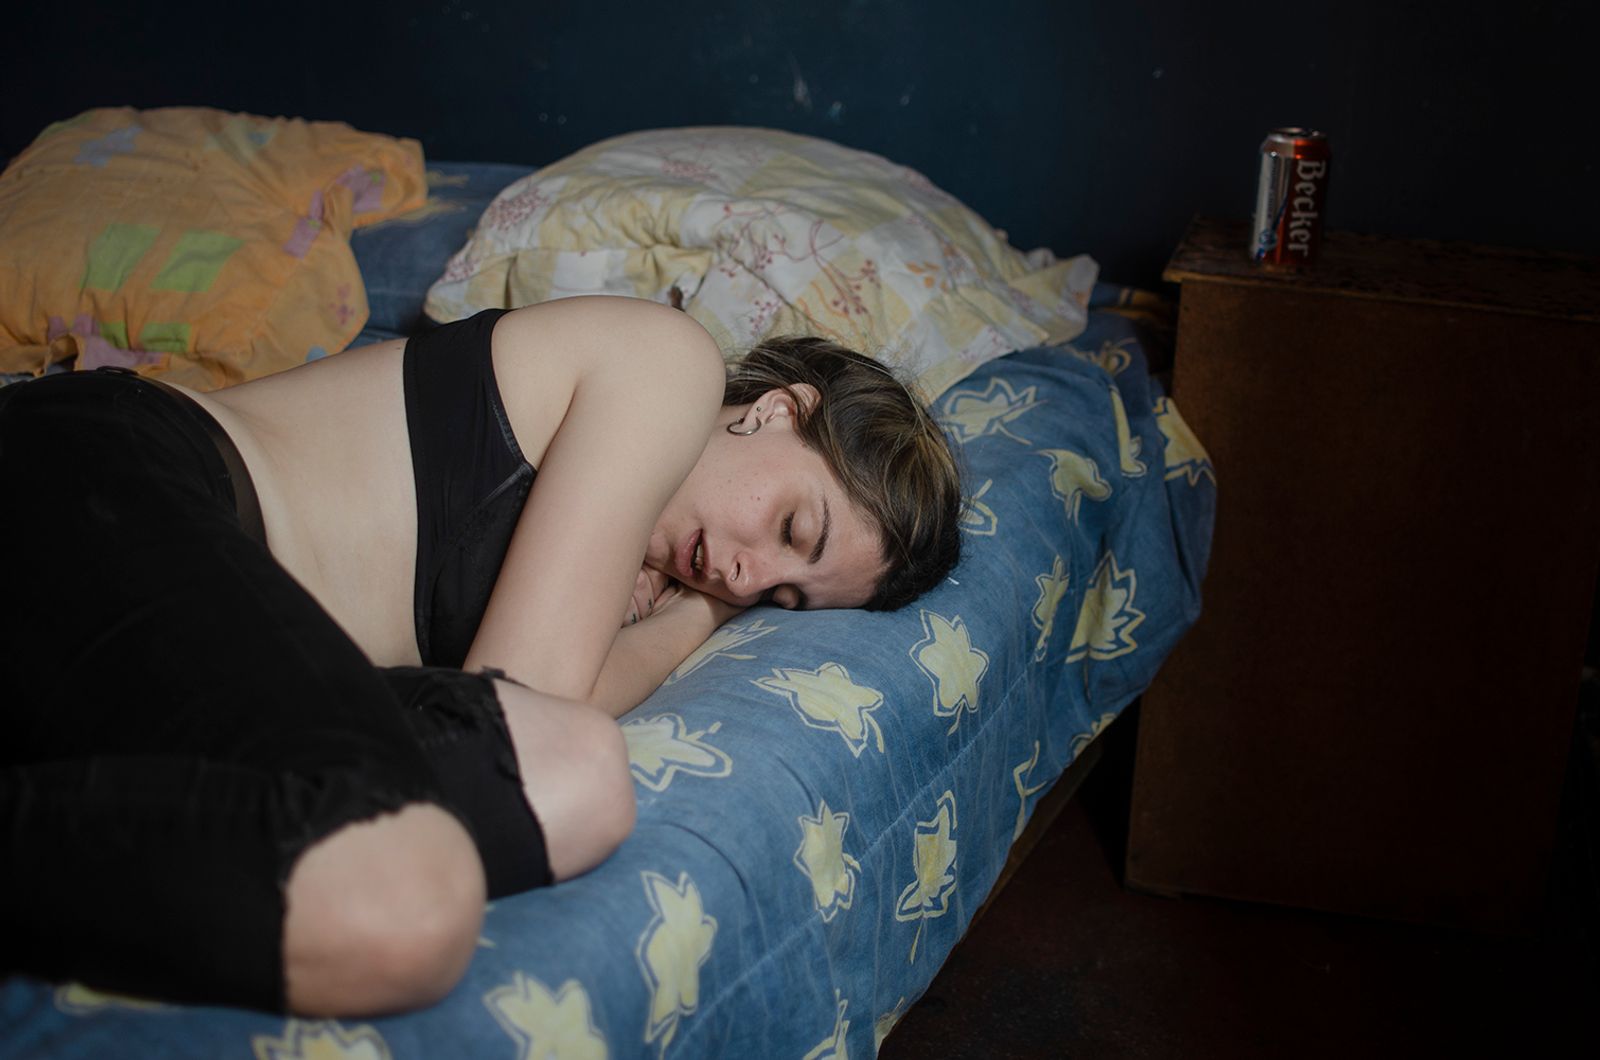 © Paz Olivares droguett - Image from the Sexualidades femeninas photography project